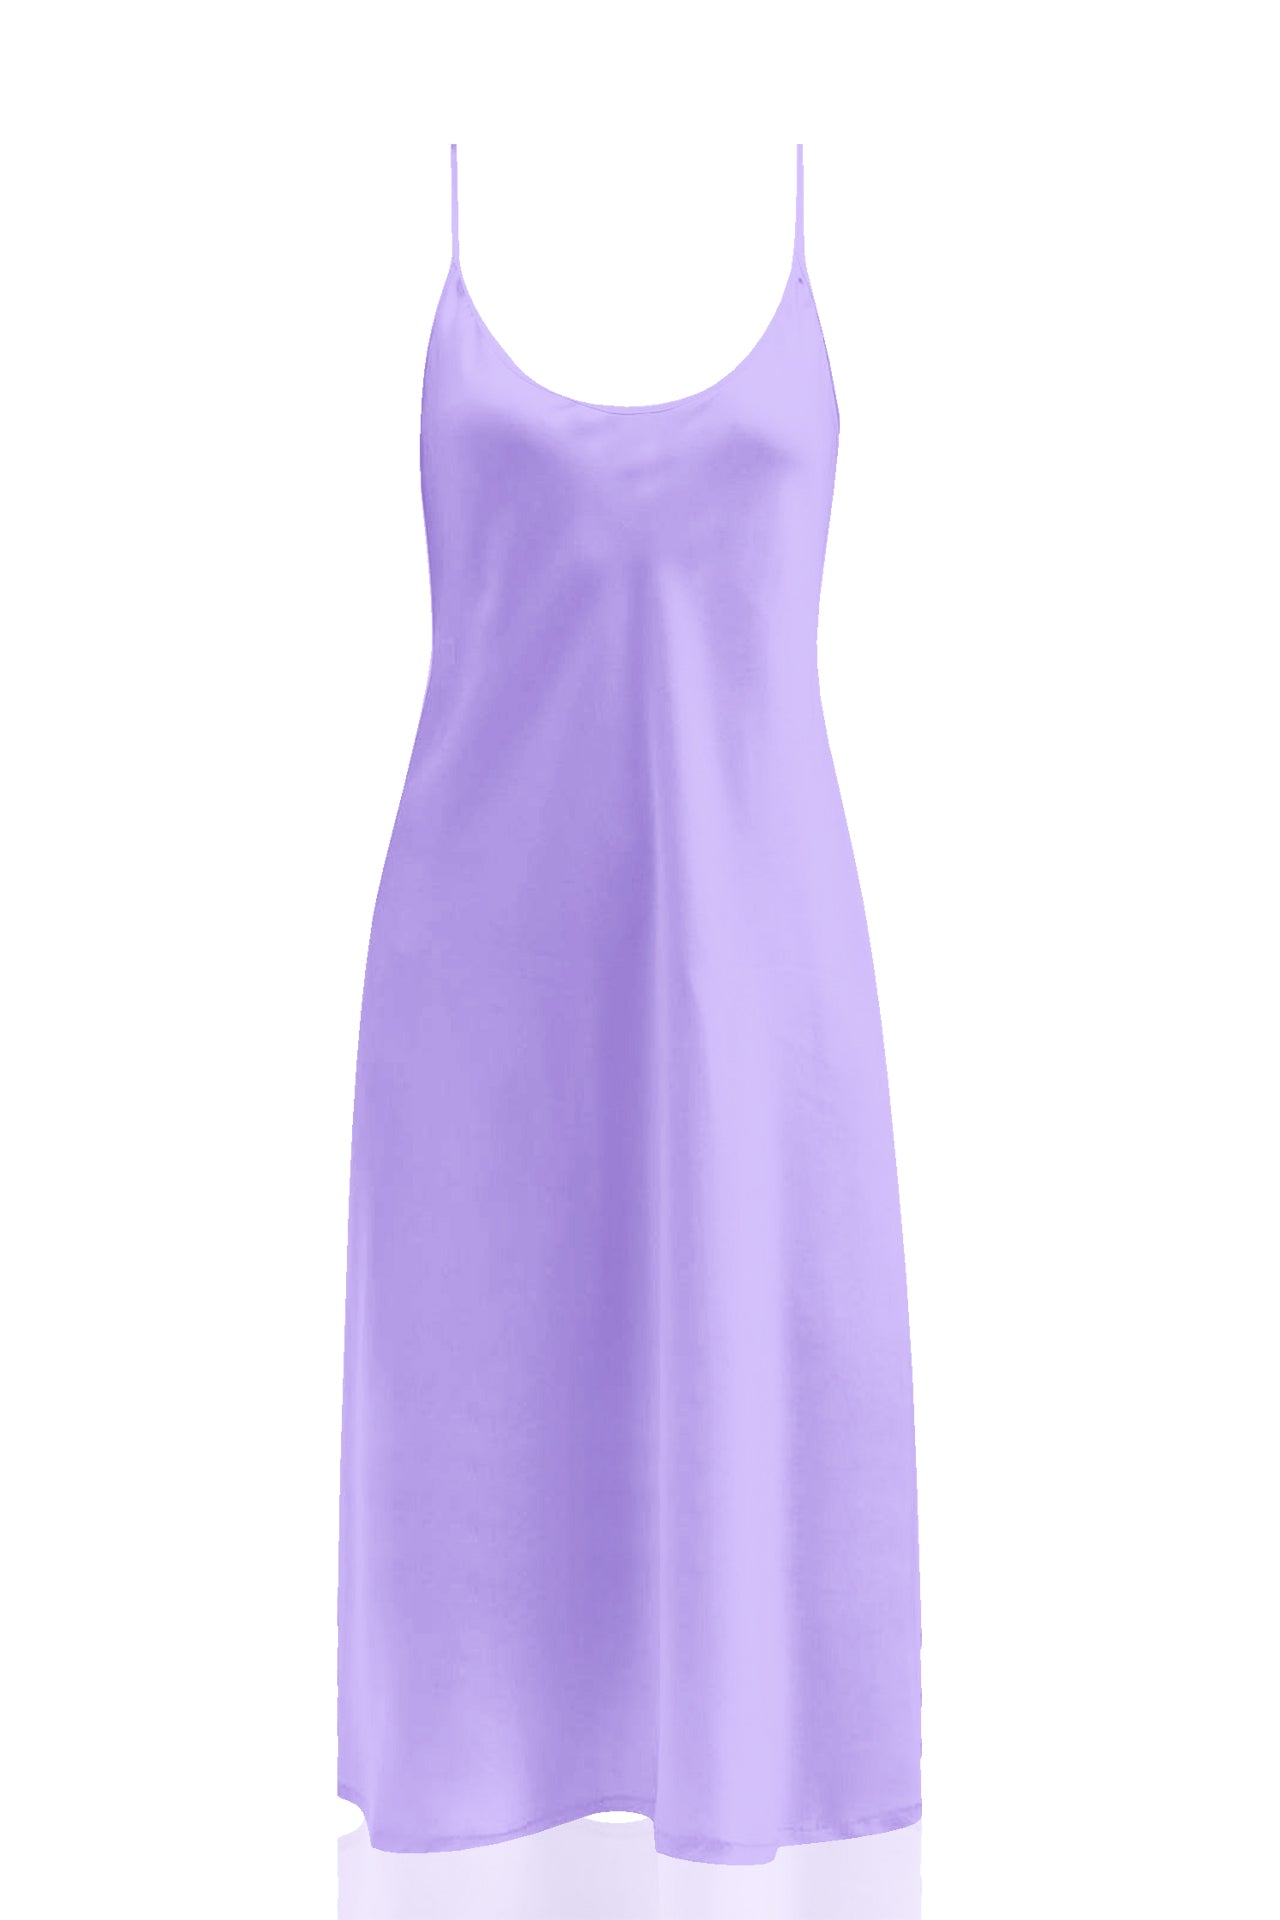 Solid Vegan Silk Midi Slip Dress in Digital Lavender Made with Cupro